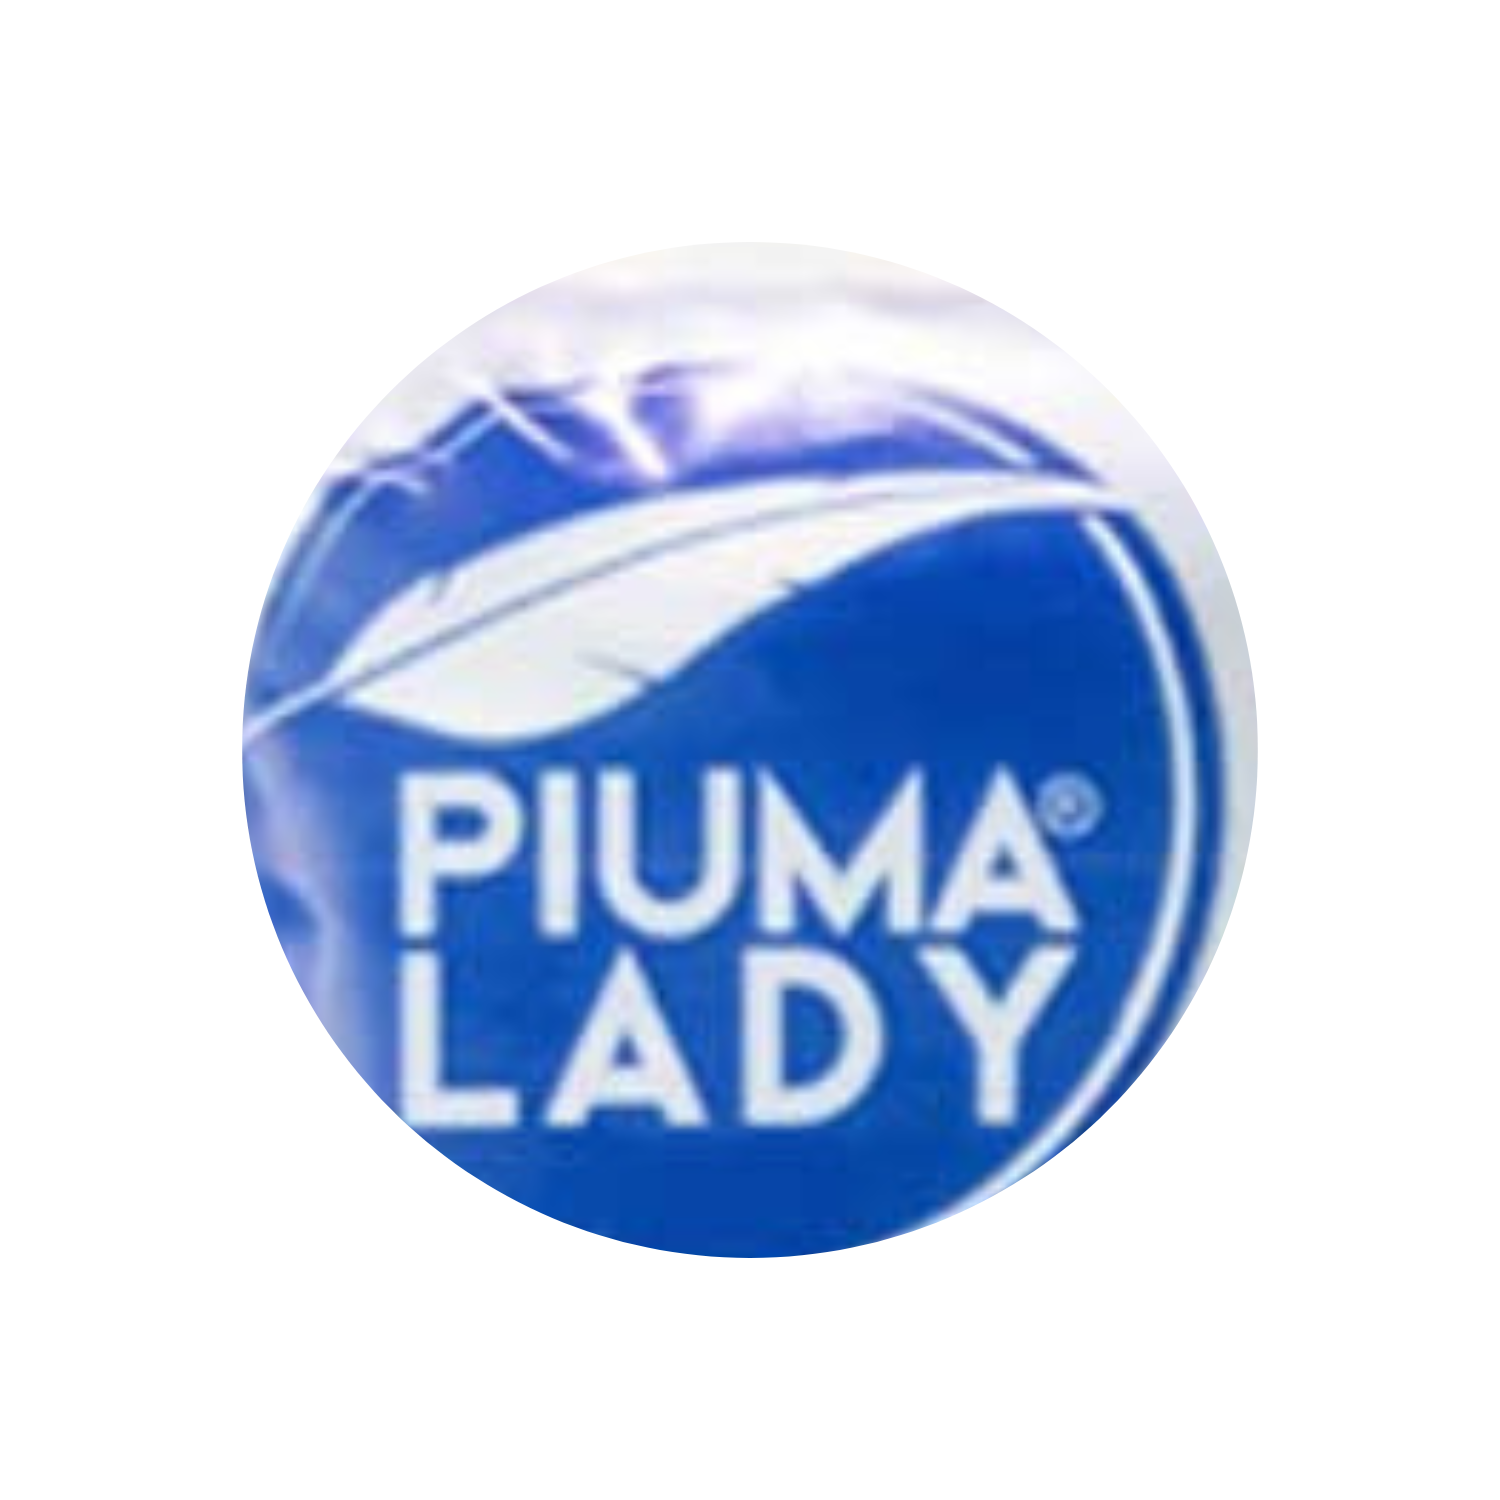 Lady piuma